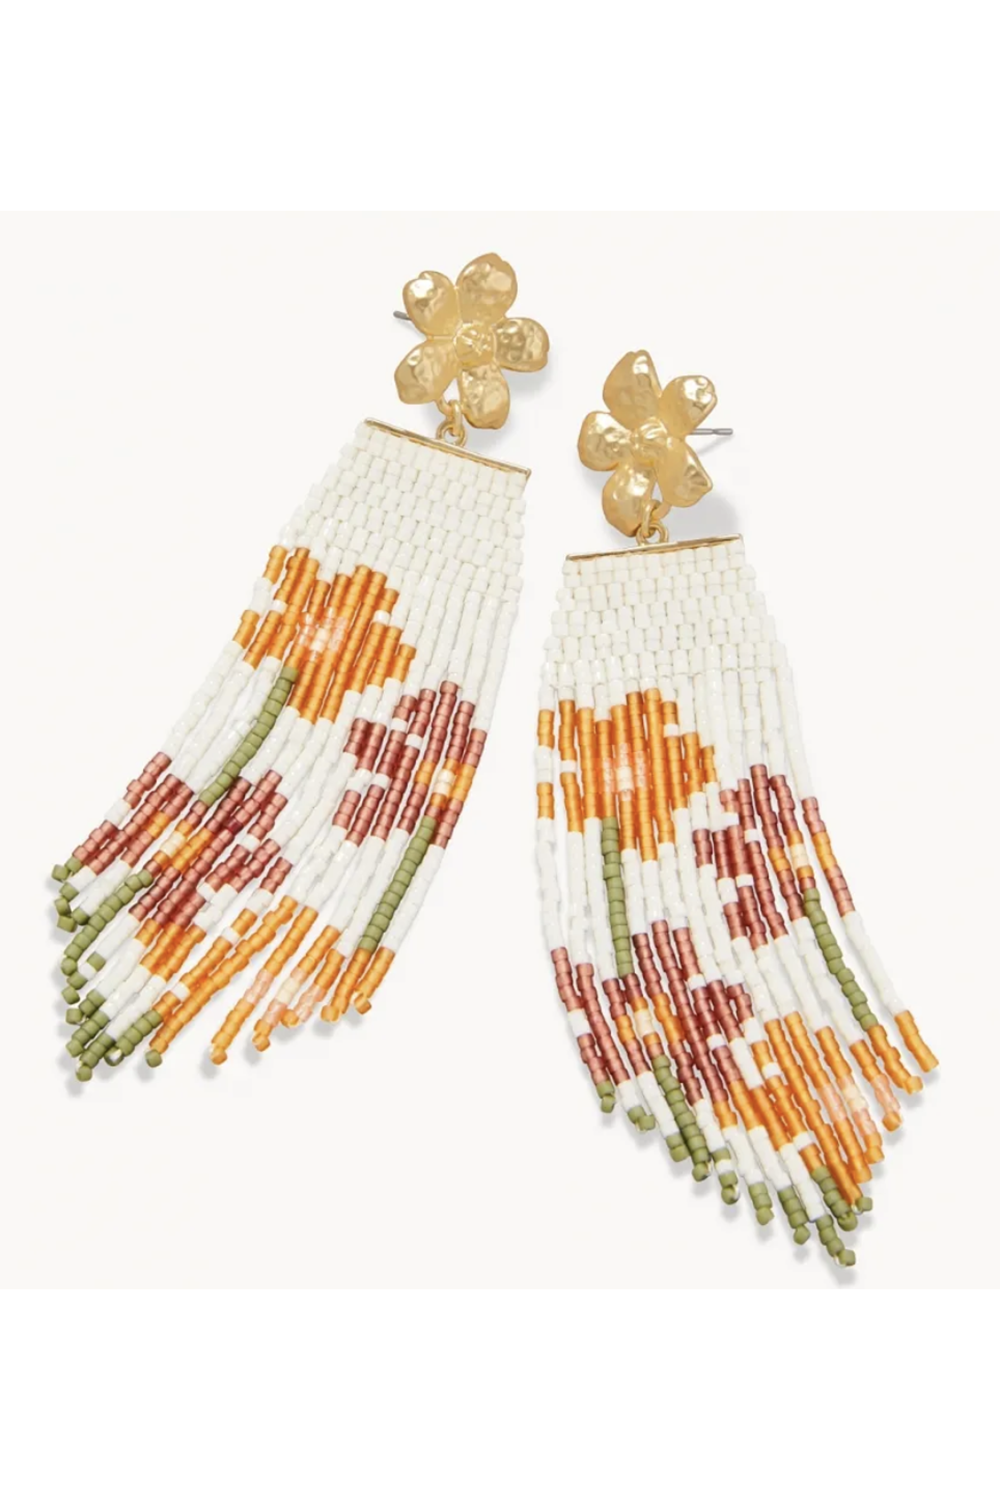 SIDEWALK SALE ITEM - Bitty Bead Earrings - Floral Stems